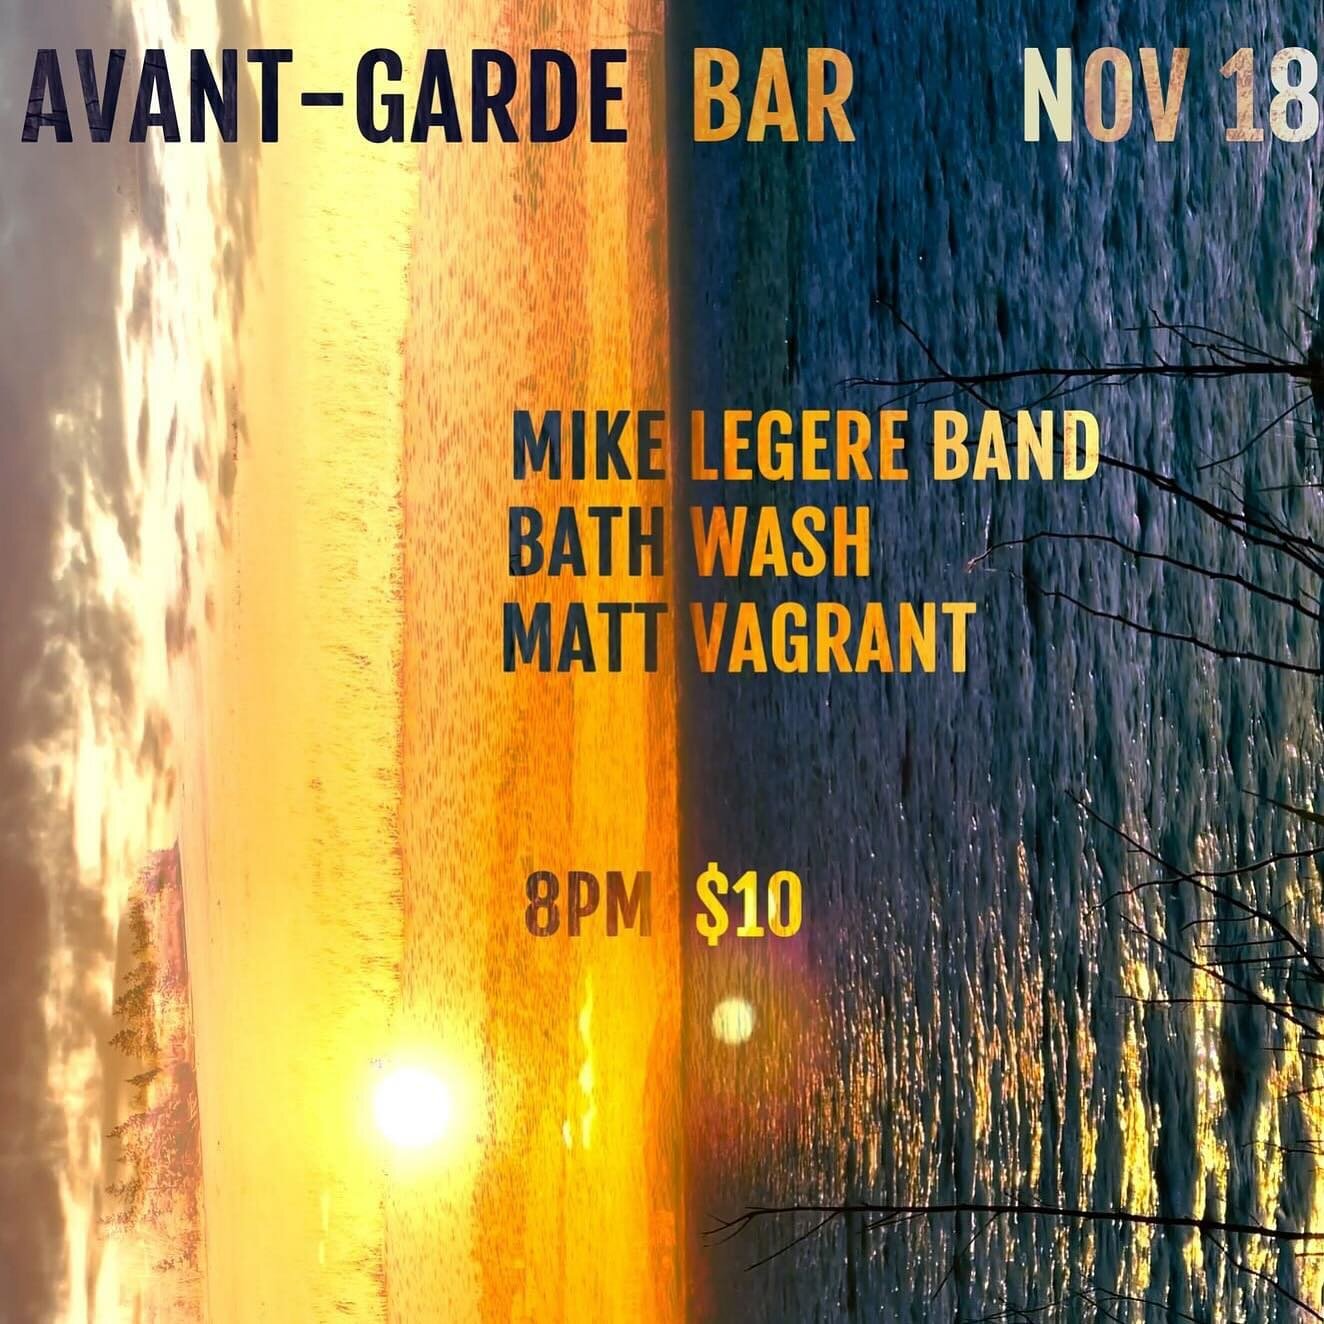 WE BACK, BABY! Join us at @avantgardebar on Nov. 18 for @mattvagrant&rsquo;s first show in years #ottawa #ottmusic #folk #folkmusic